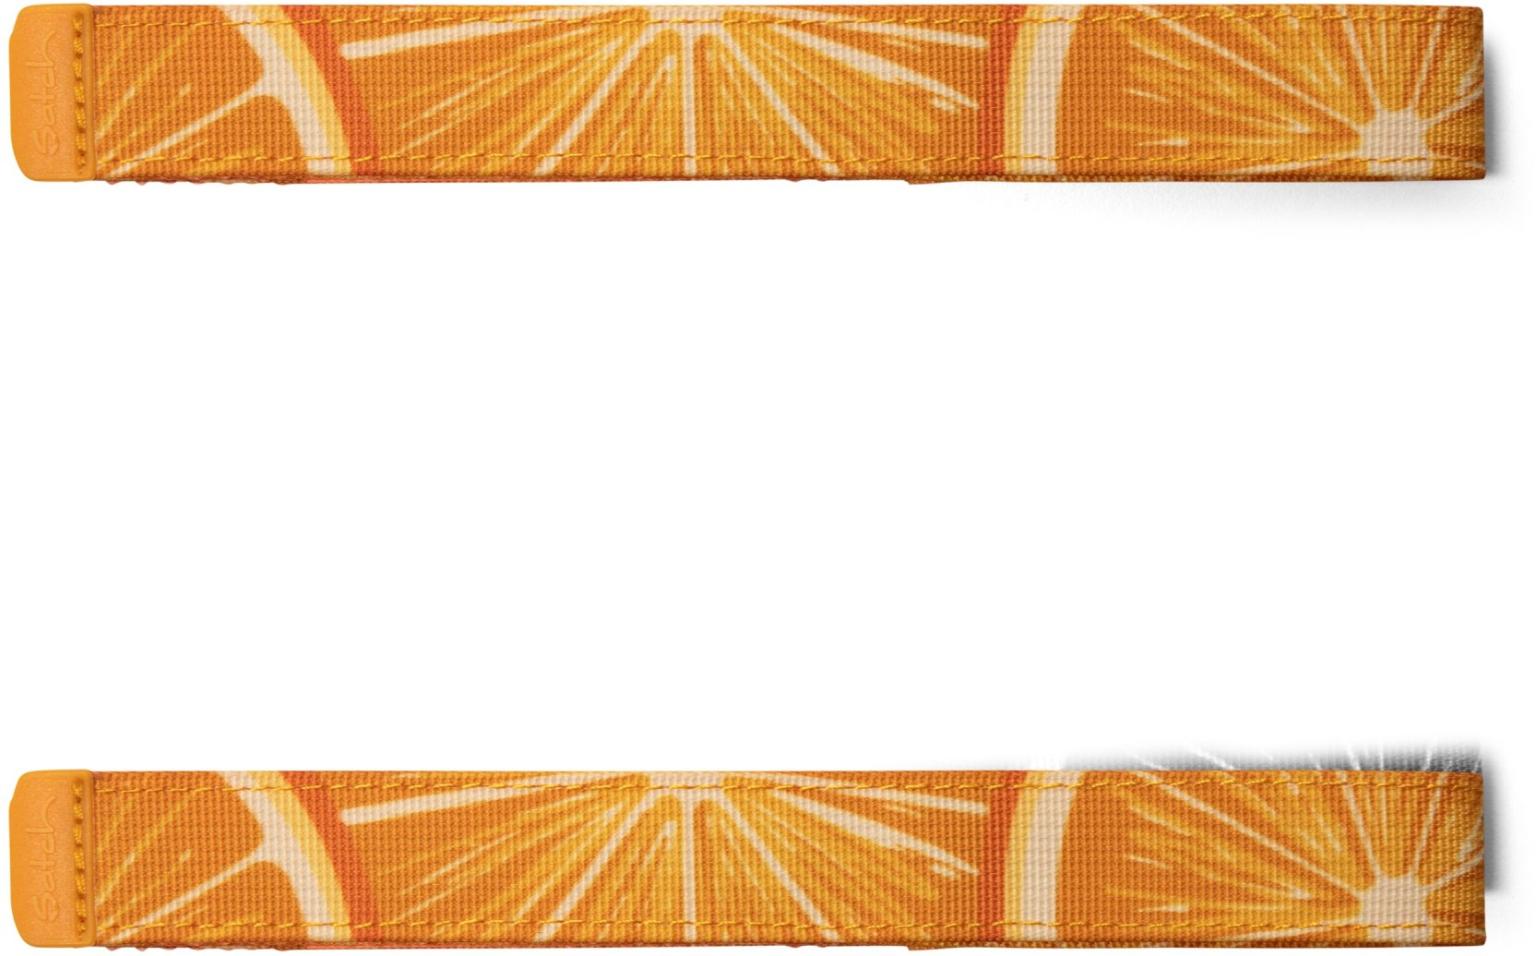 Satch Swaps Klettbänder Juicy Orange Knallfarbe individuell